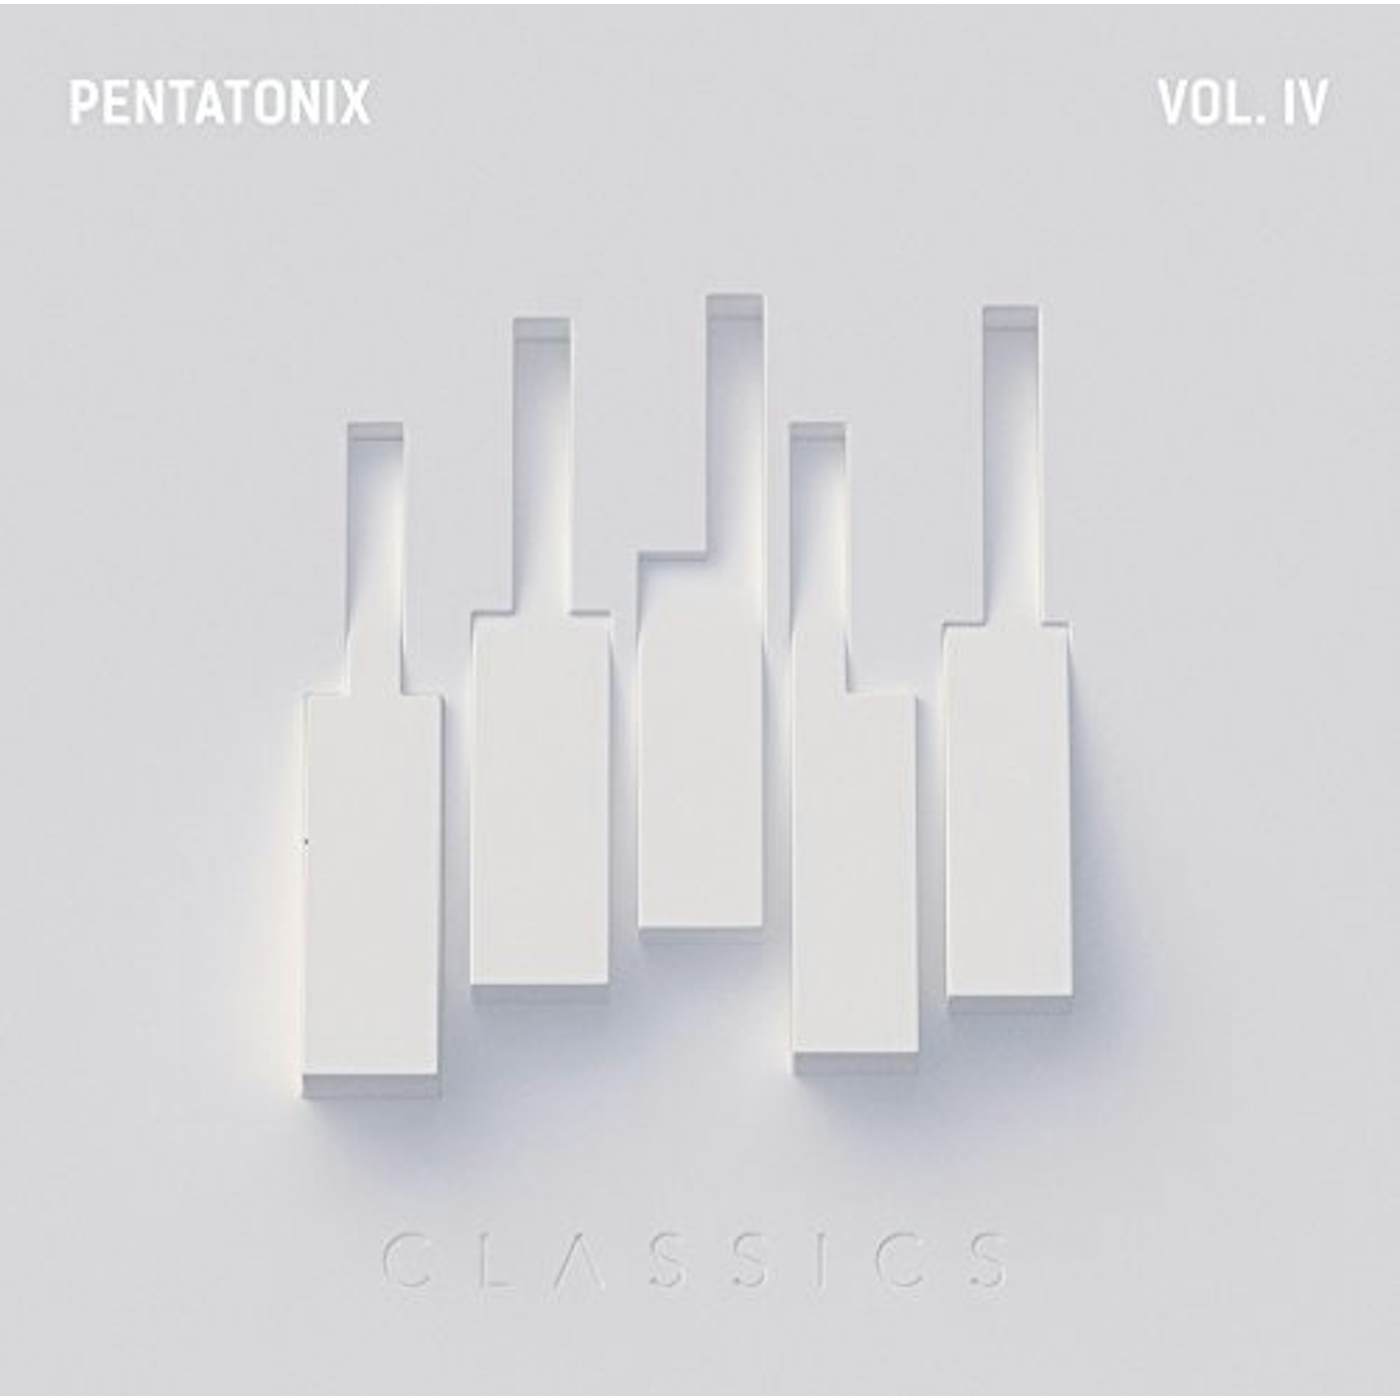 PENTATONIX VOL IV CD